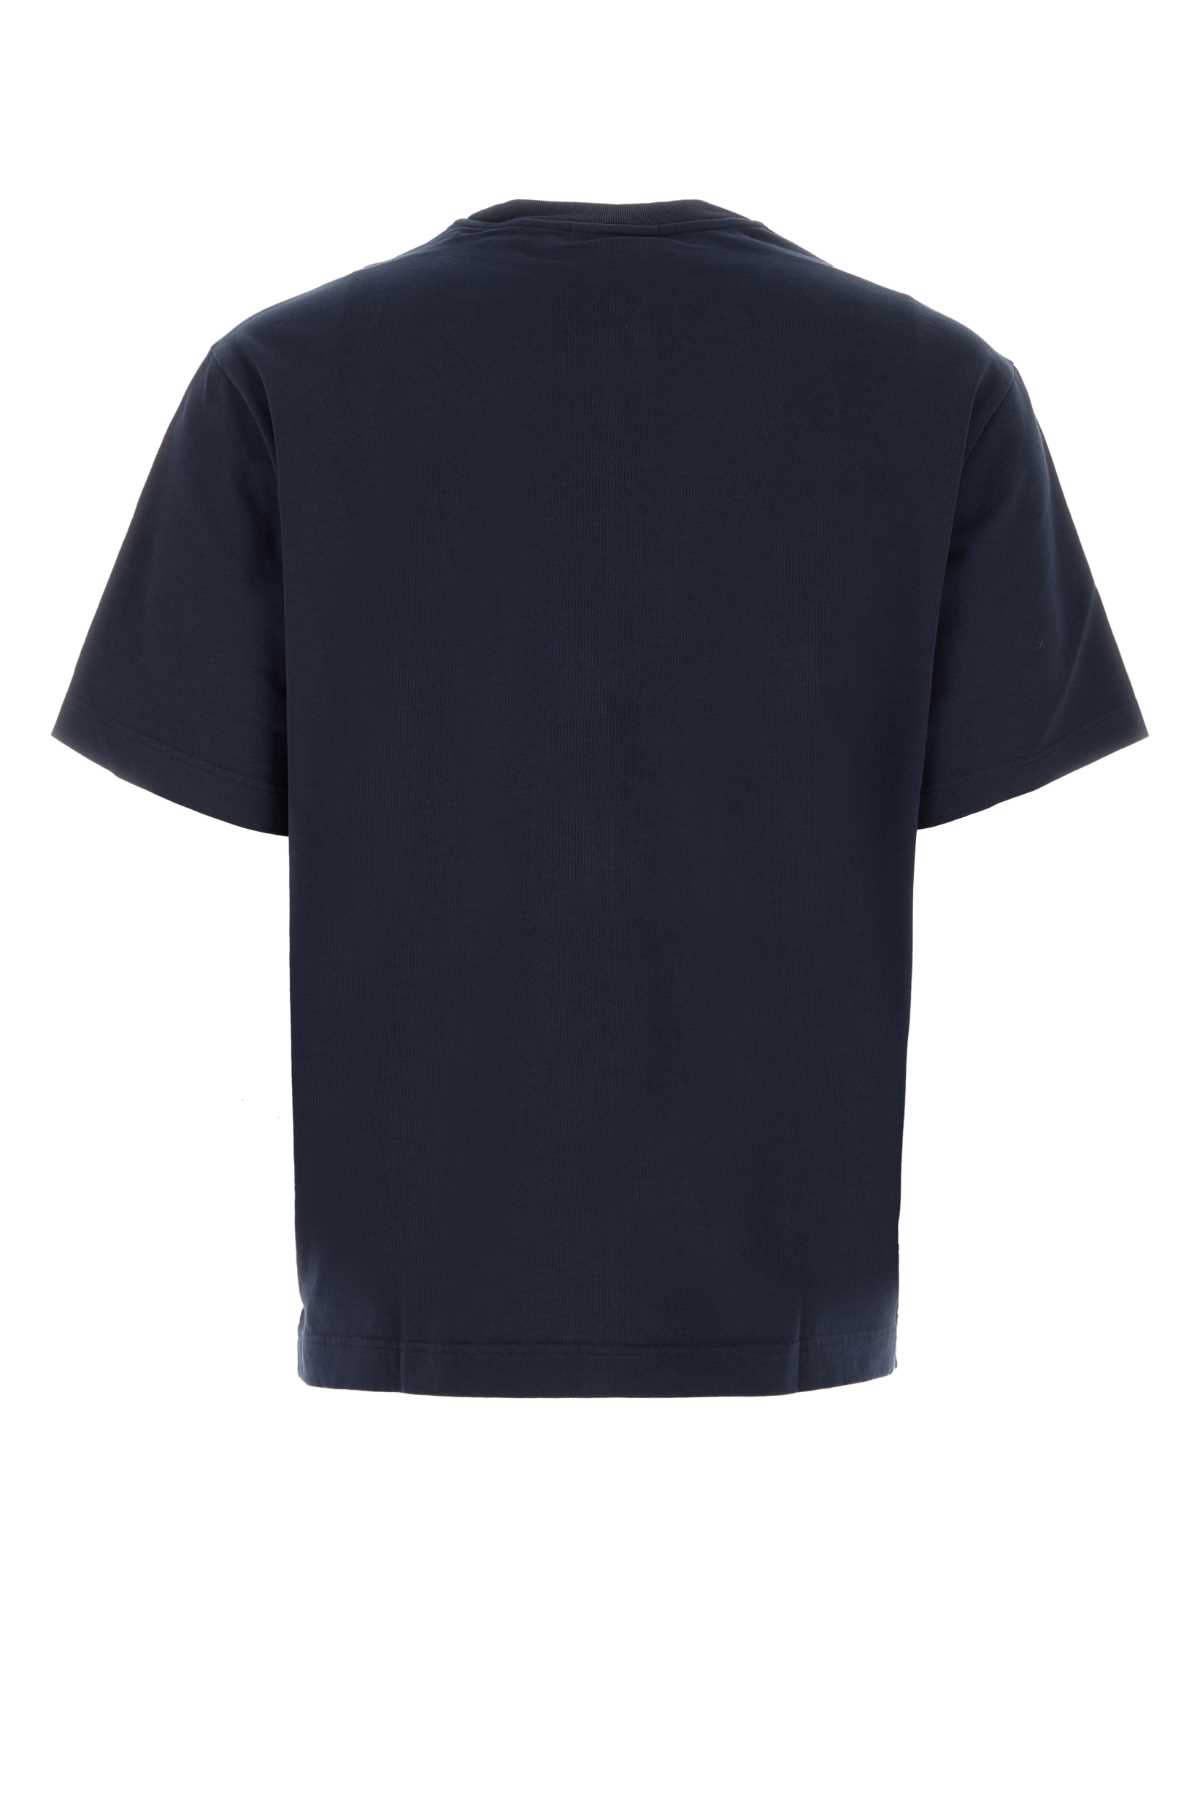 Maison Kitsuné Midnight Blue Cotton T-shirt In Navy